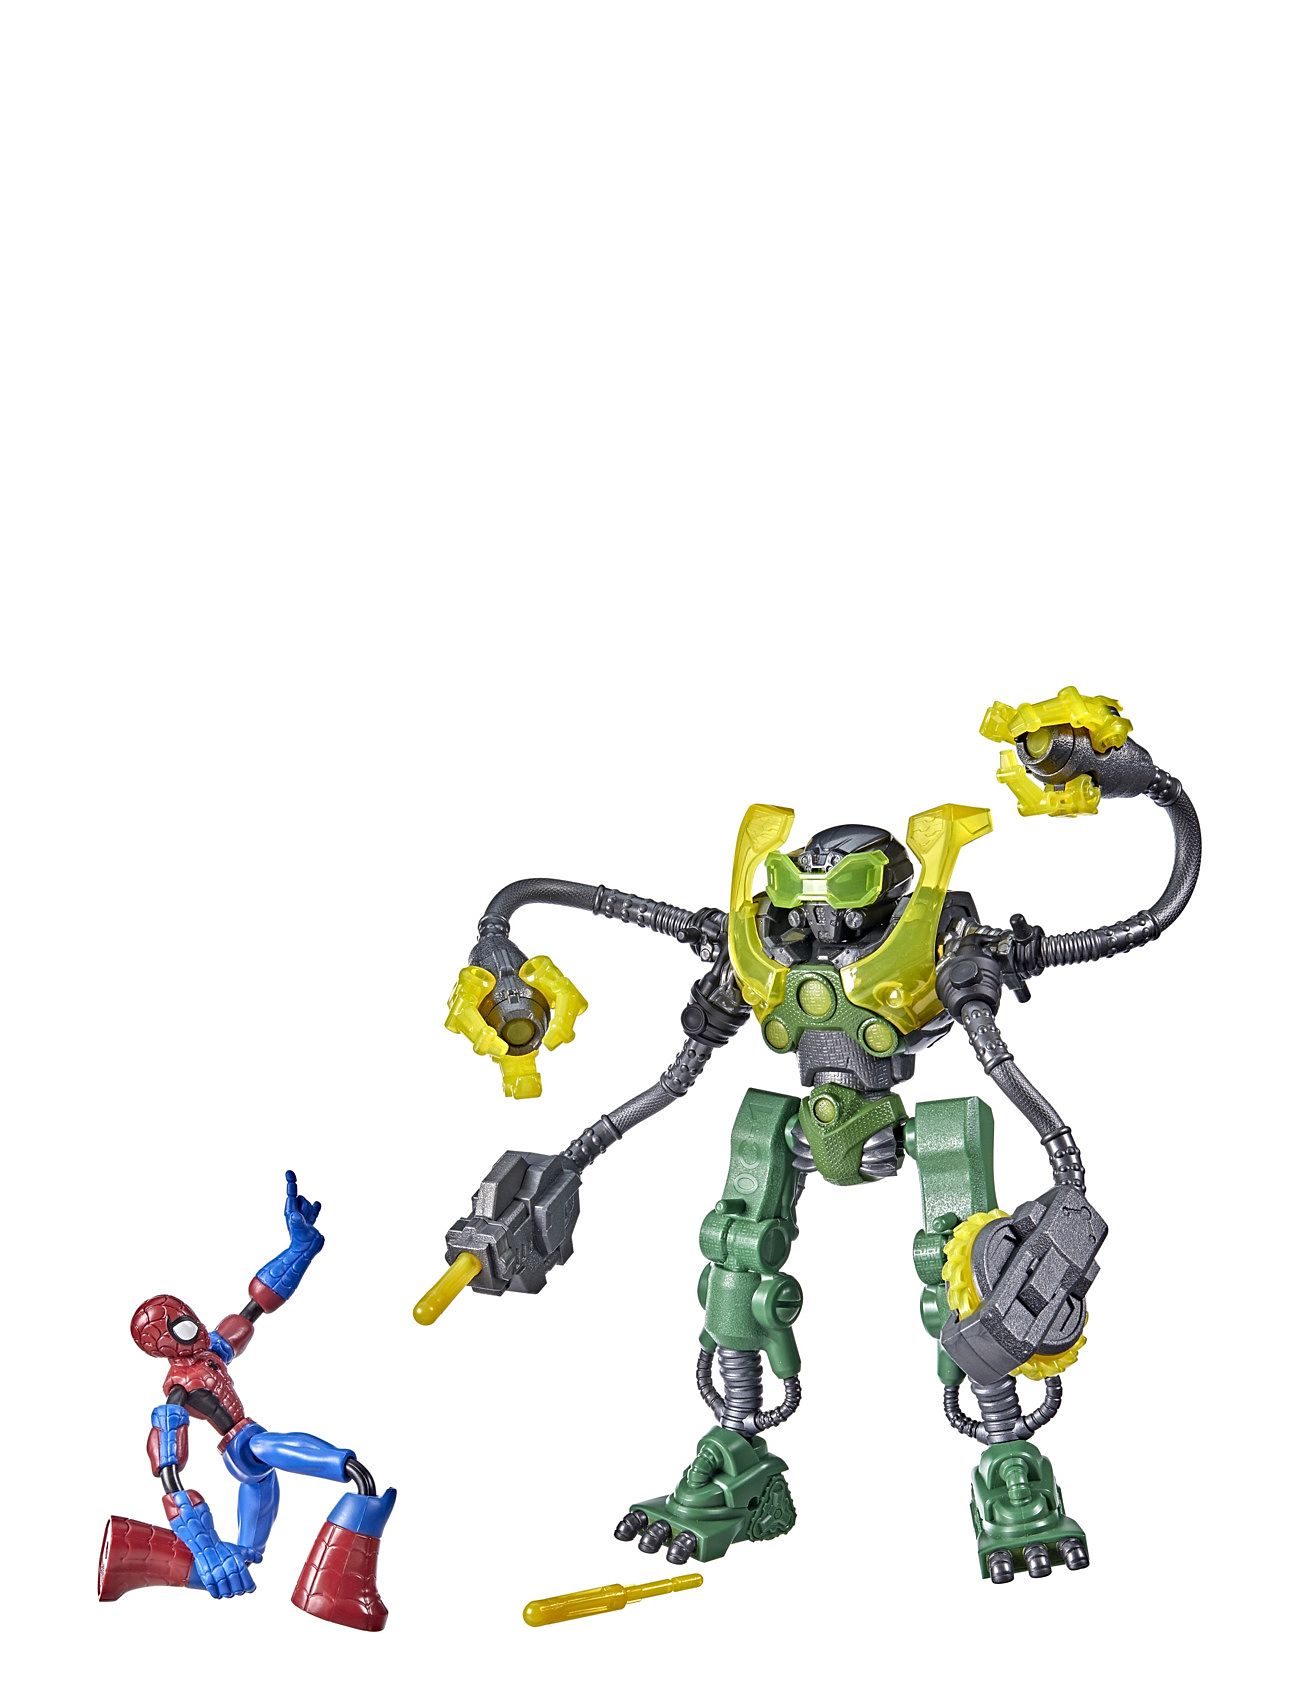 Spider-Man Bend And Flex Spider-Man Vs. Ock-Bot Toys Playsets & Action Figures Action Figures Multi/patterned Marvel